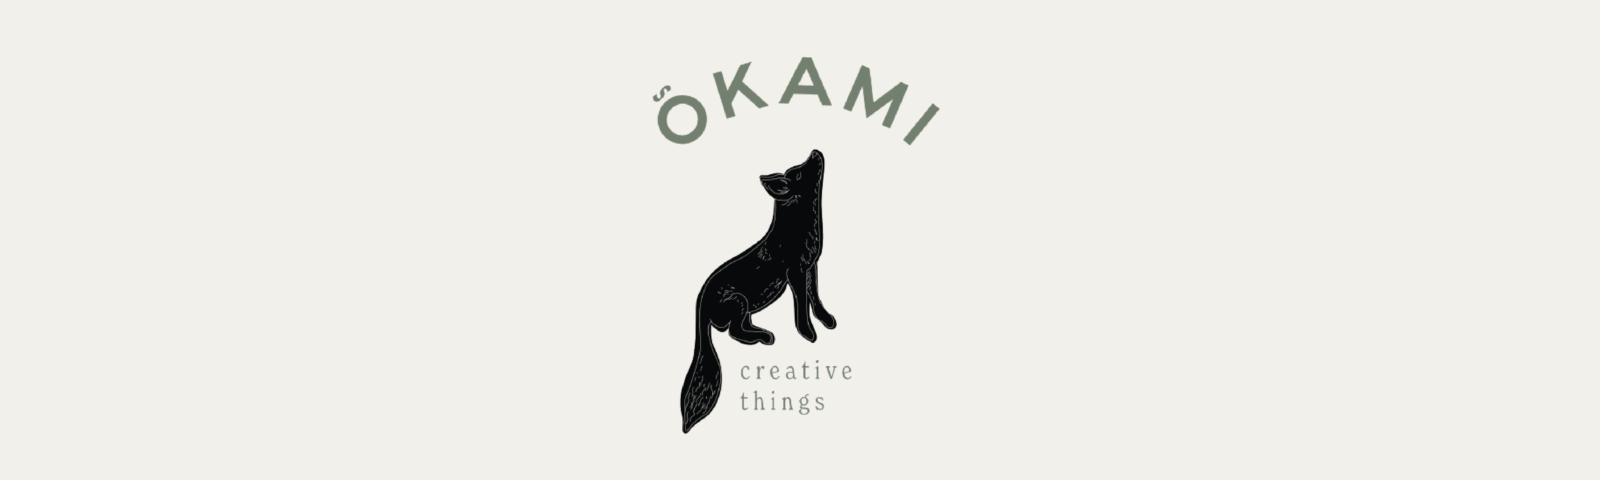 Okami Creative Things